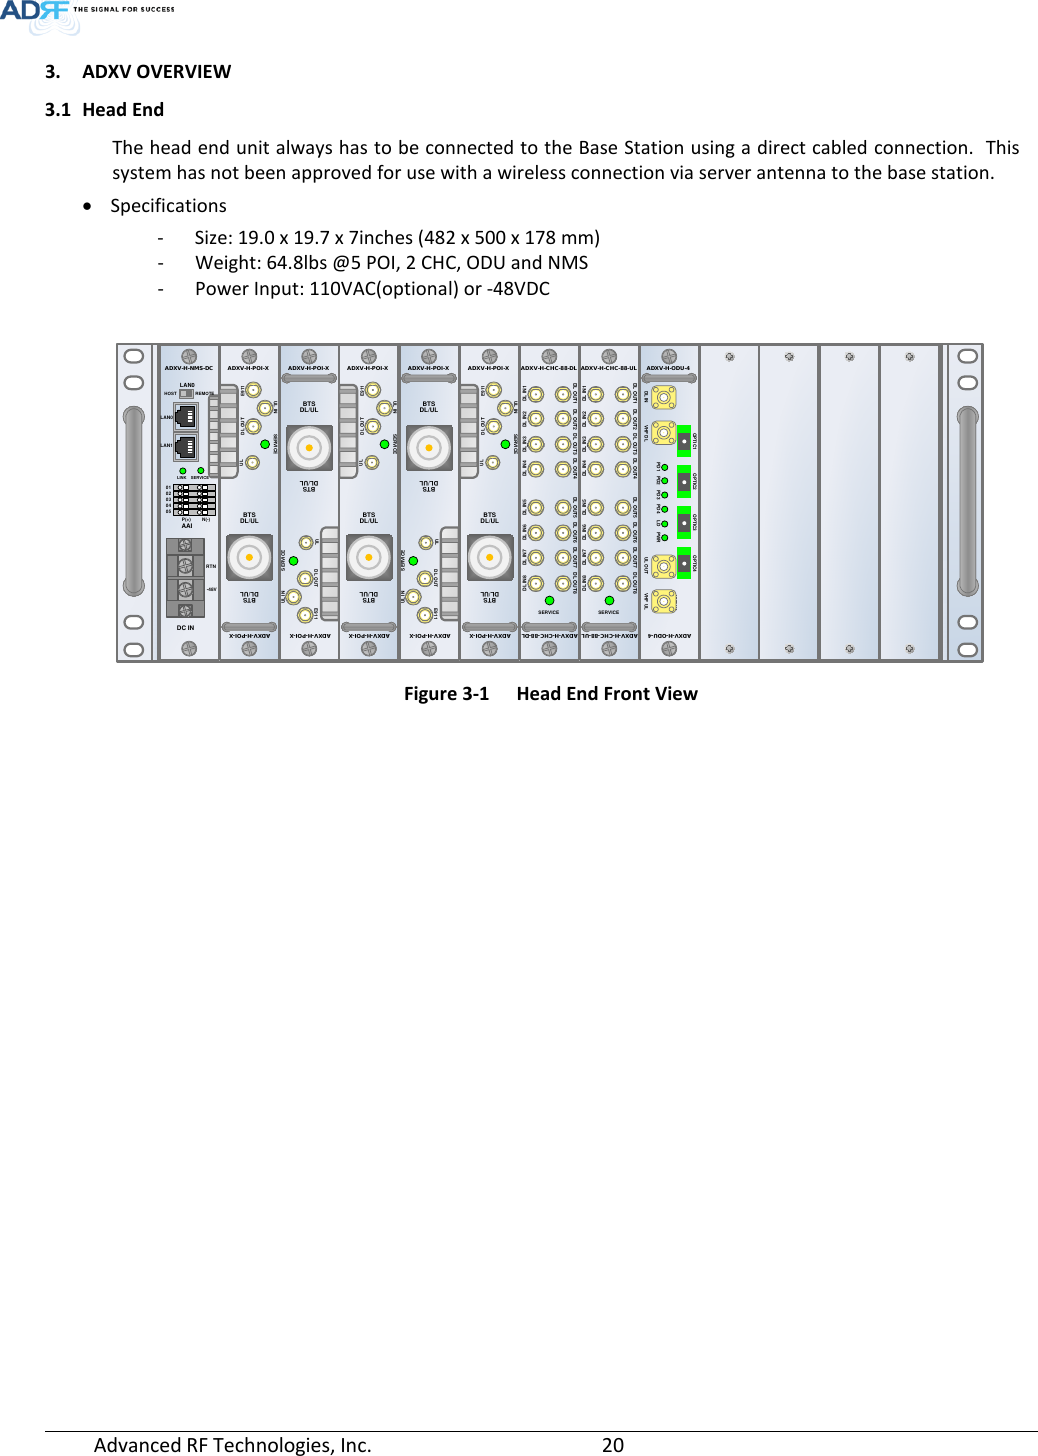 Page 20 of ADRF KOREA ADXV-R-78P-NA DAS (Distributed Antenna System) User Manual ADXV DAS